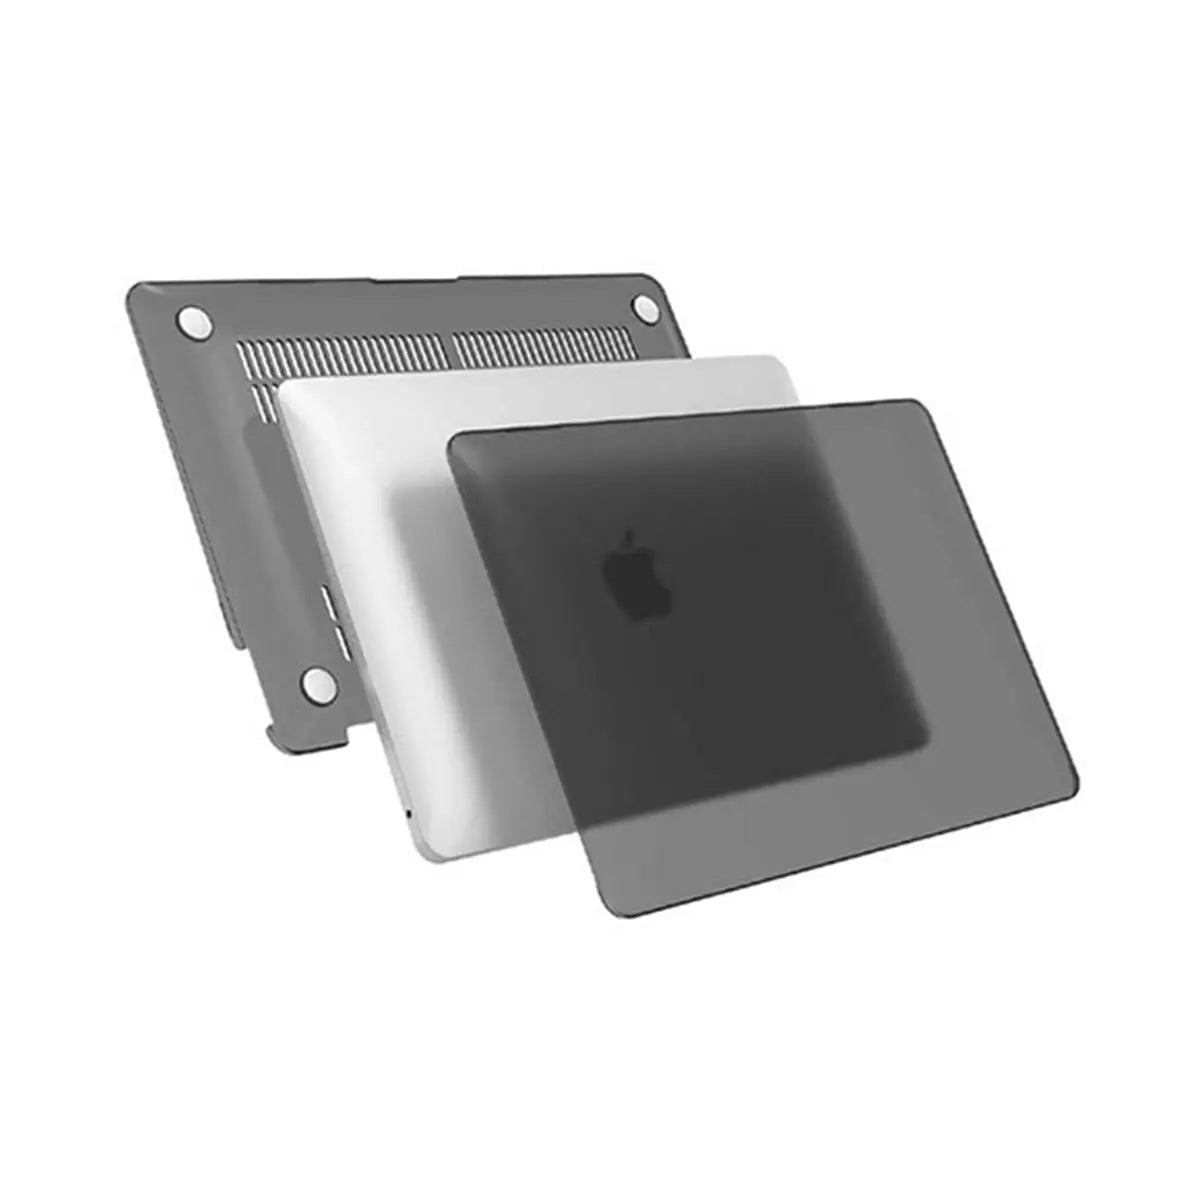 COTECi Macbook Hardshell (Translucent Black)